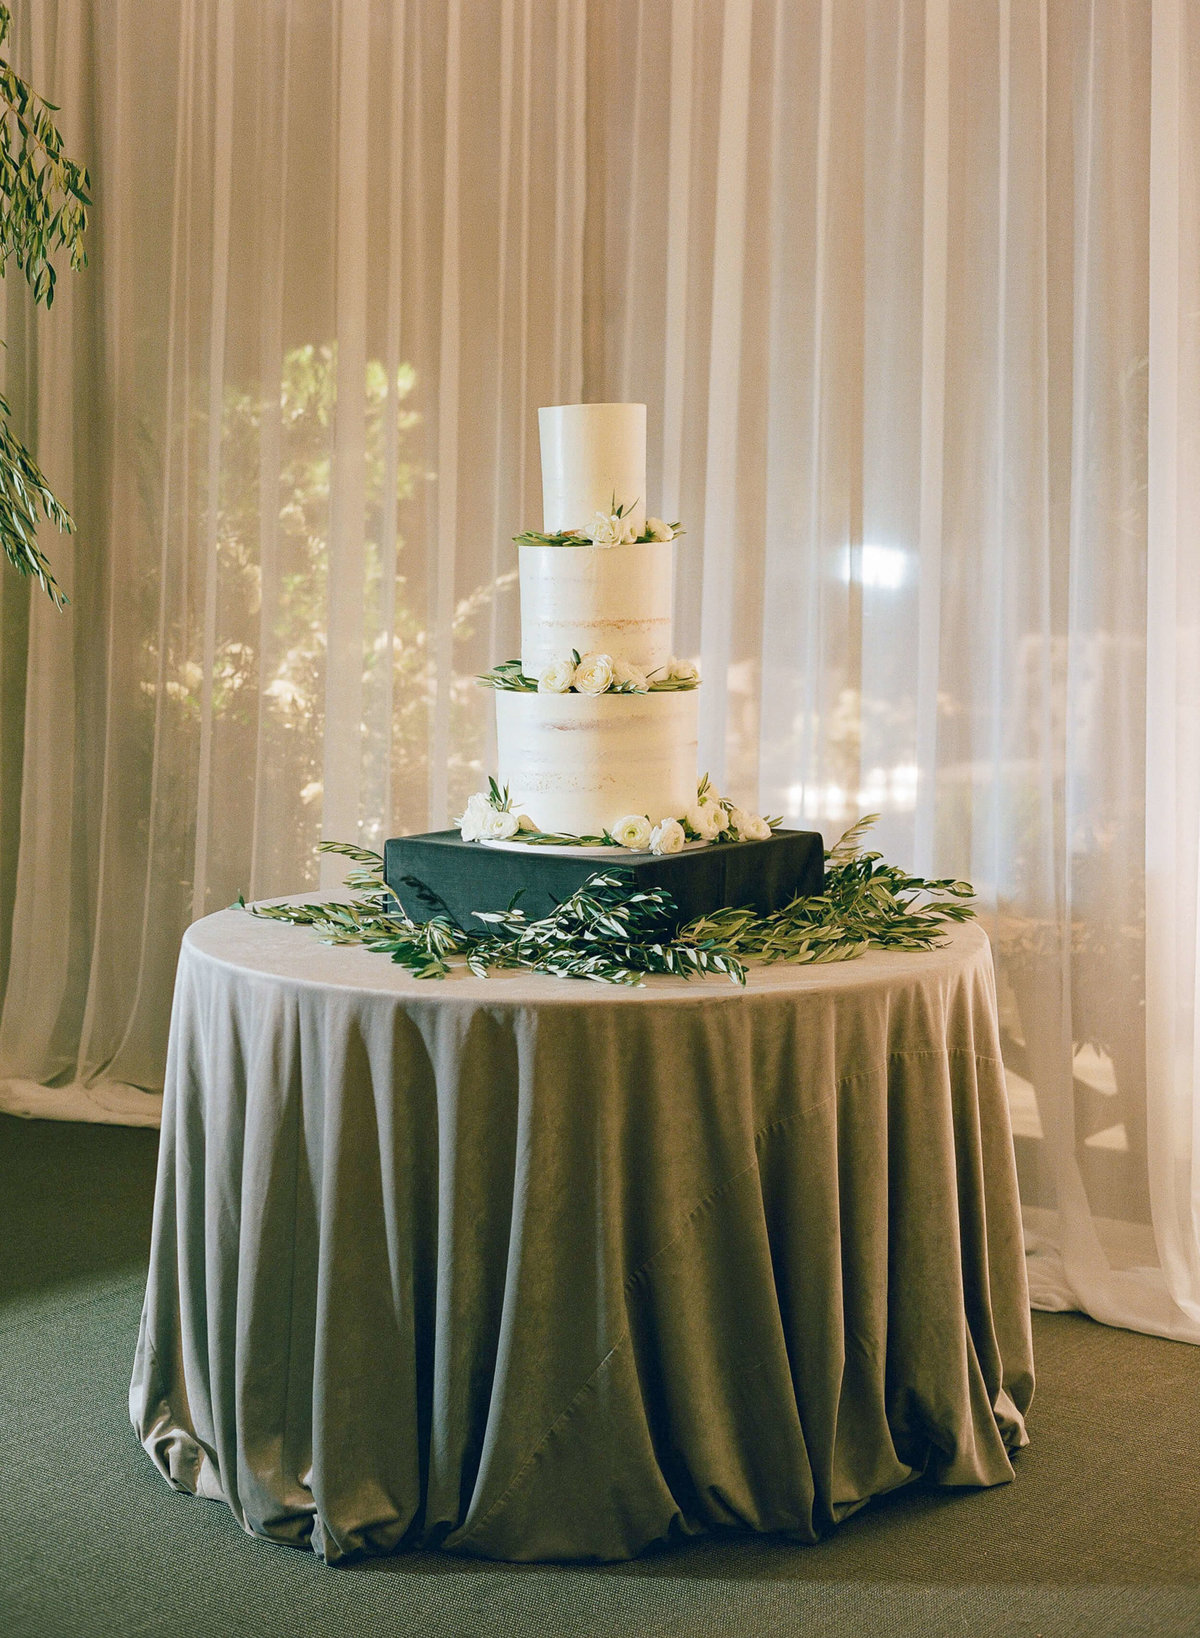 98-KTMerry-weddings-cake-fresh-flowers-Meadowood-Napa-Valley